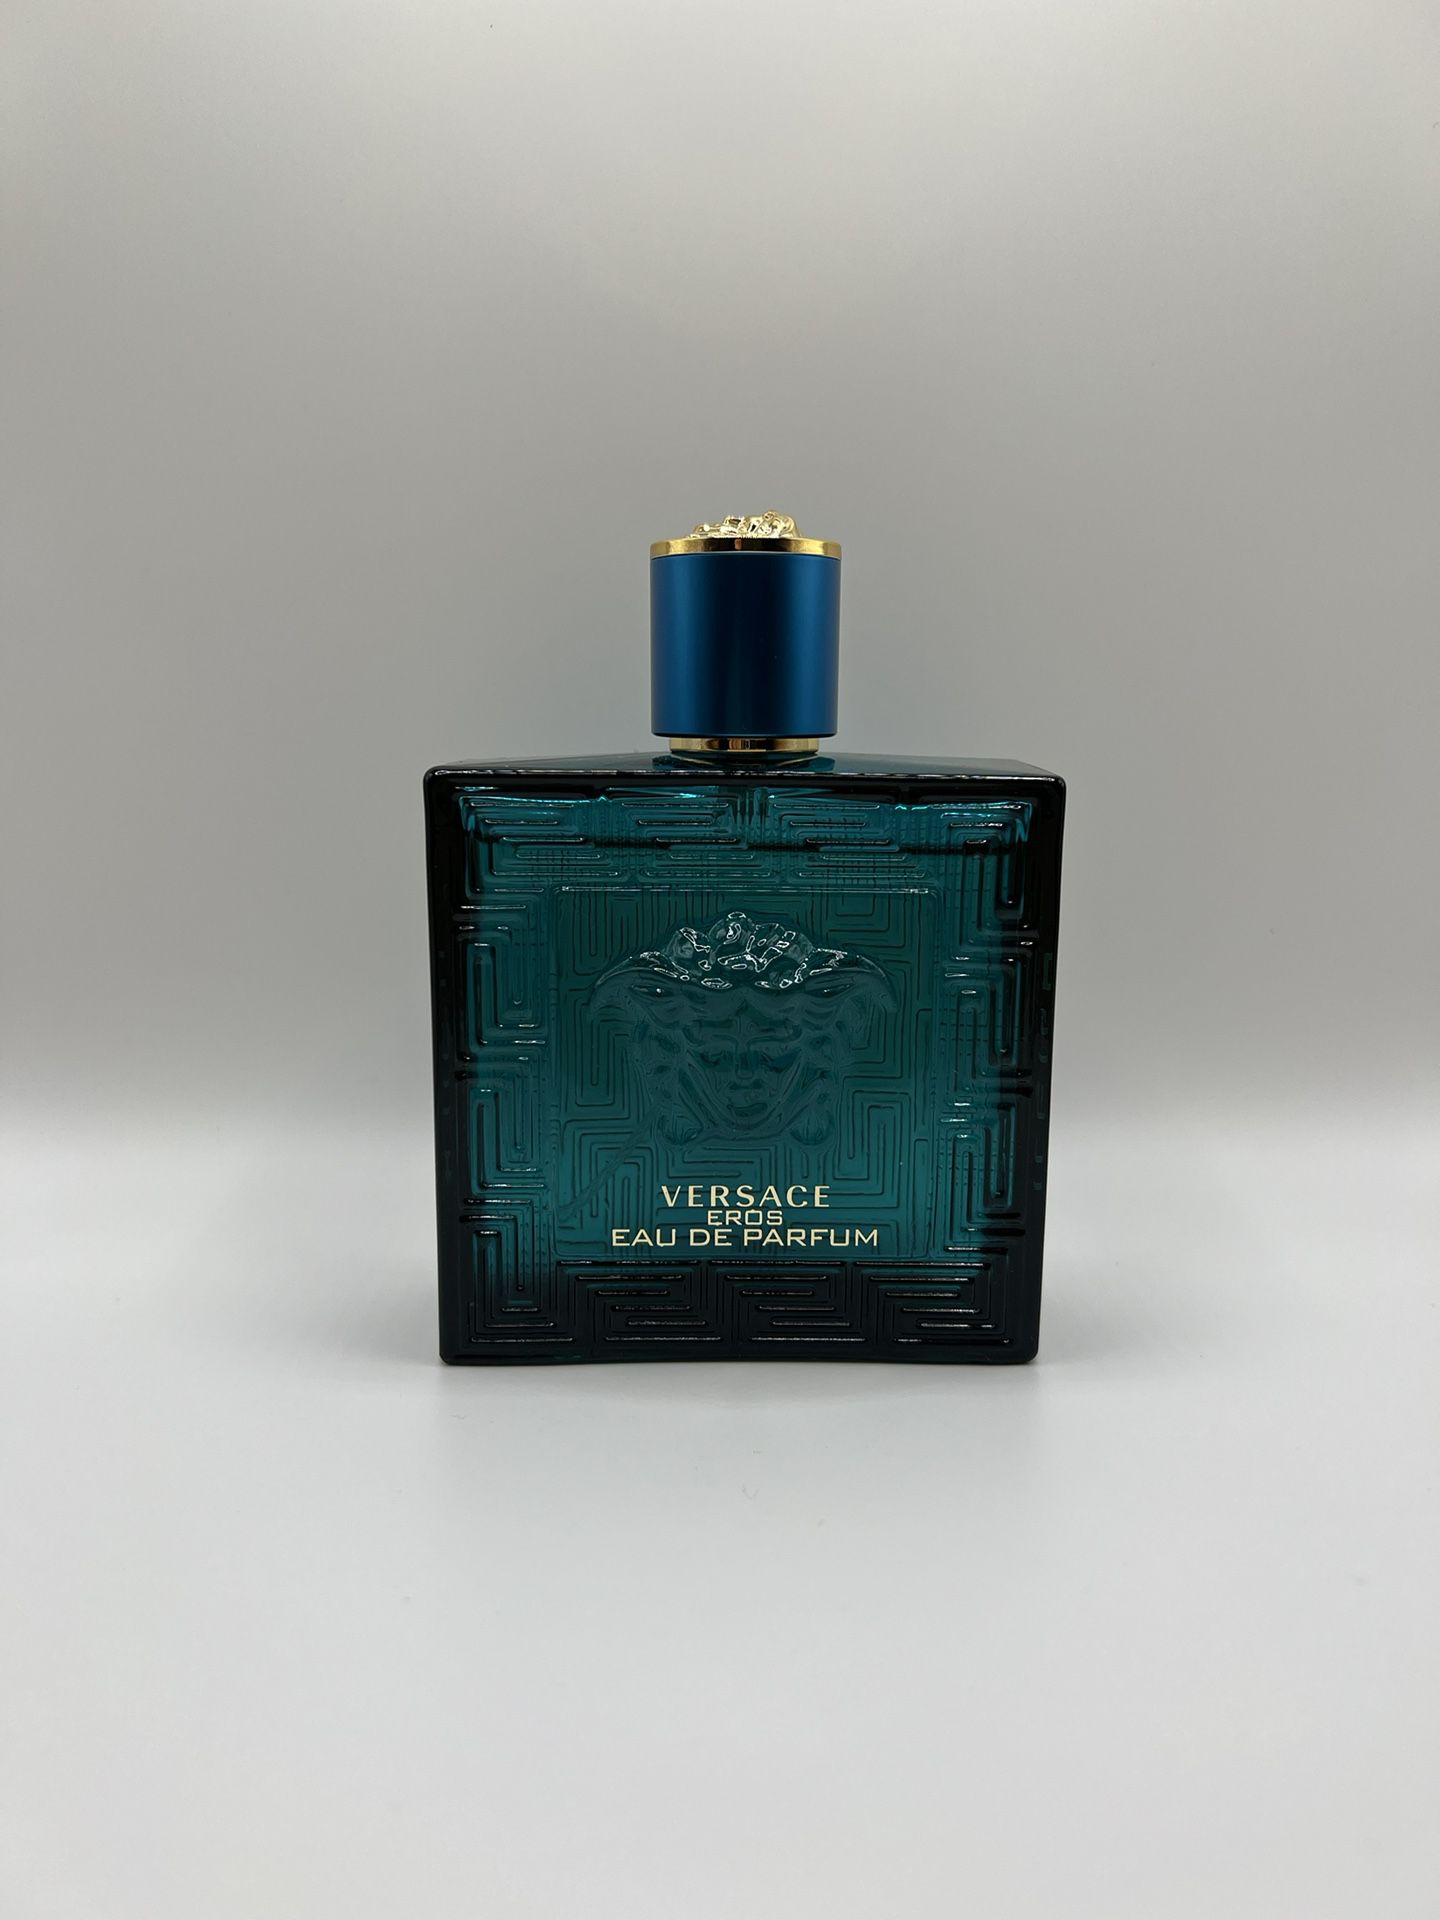 Versace Eros EDP Fragrance Glass Decant Sample Spray Travel Size Vial 10ML